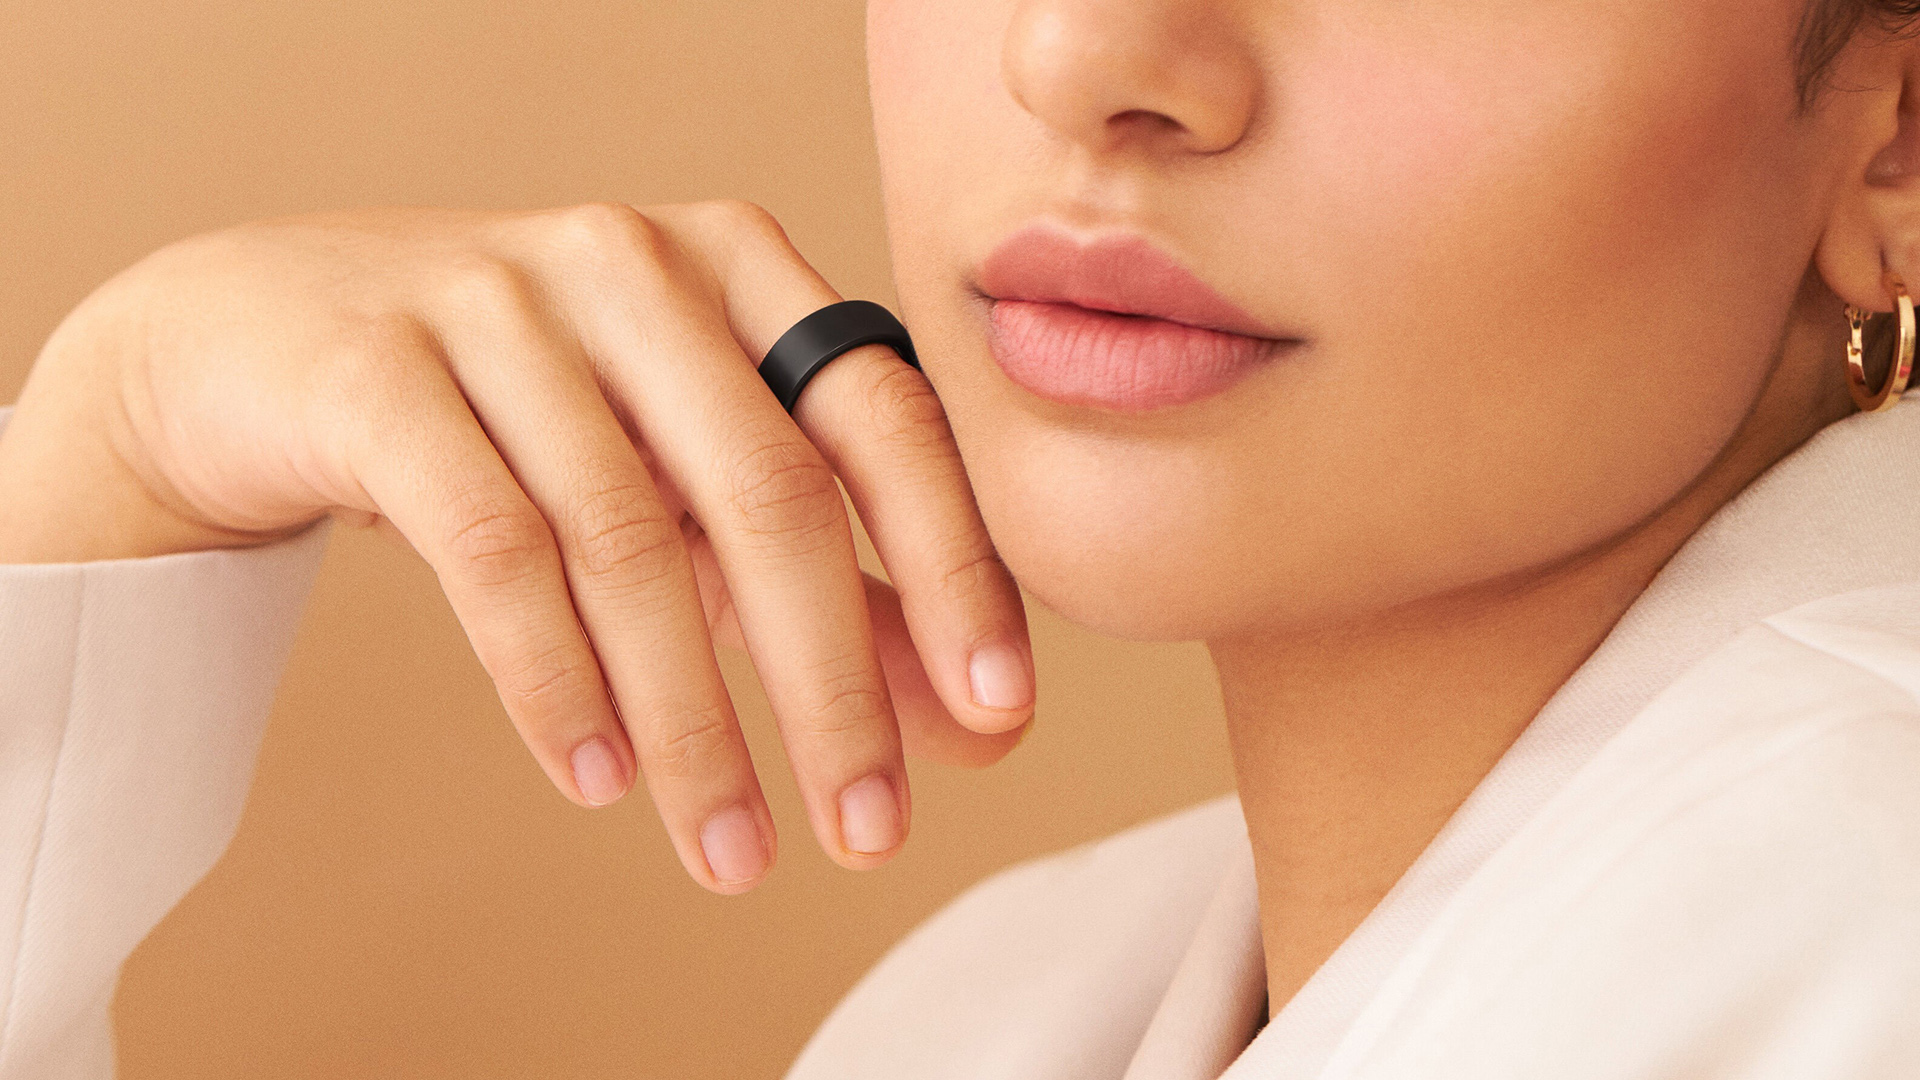 Hybrid Wellness Smart Rings : Circular Smart Ring